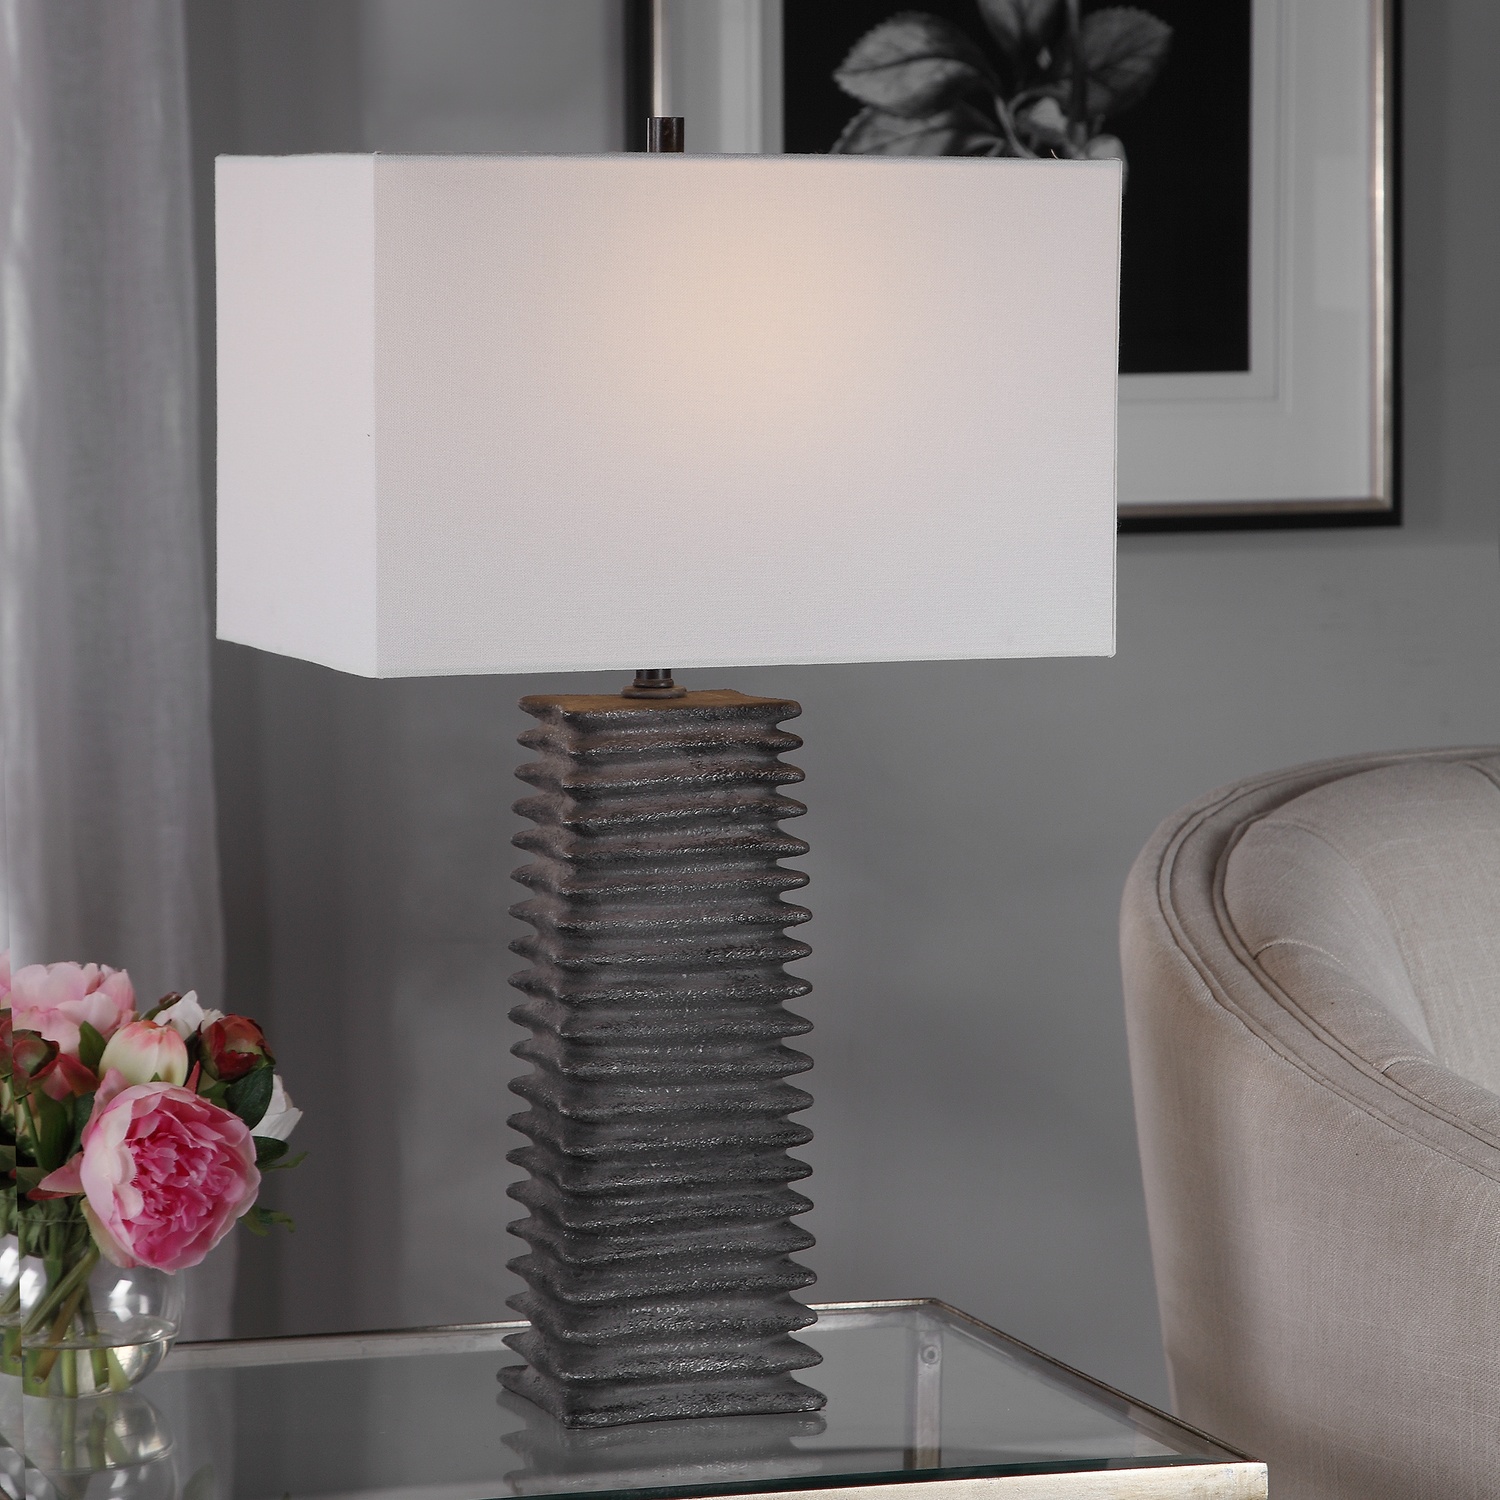 Sanderson-Metallic Charcoal Table Lamp